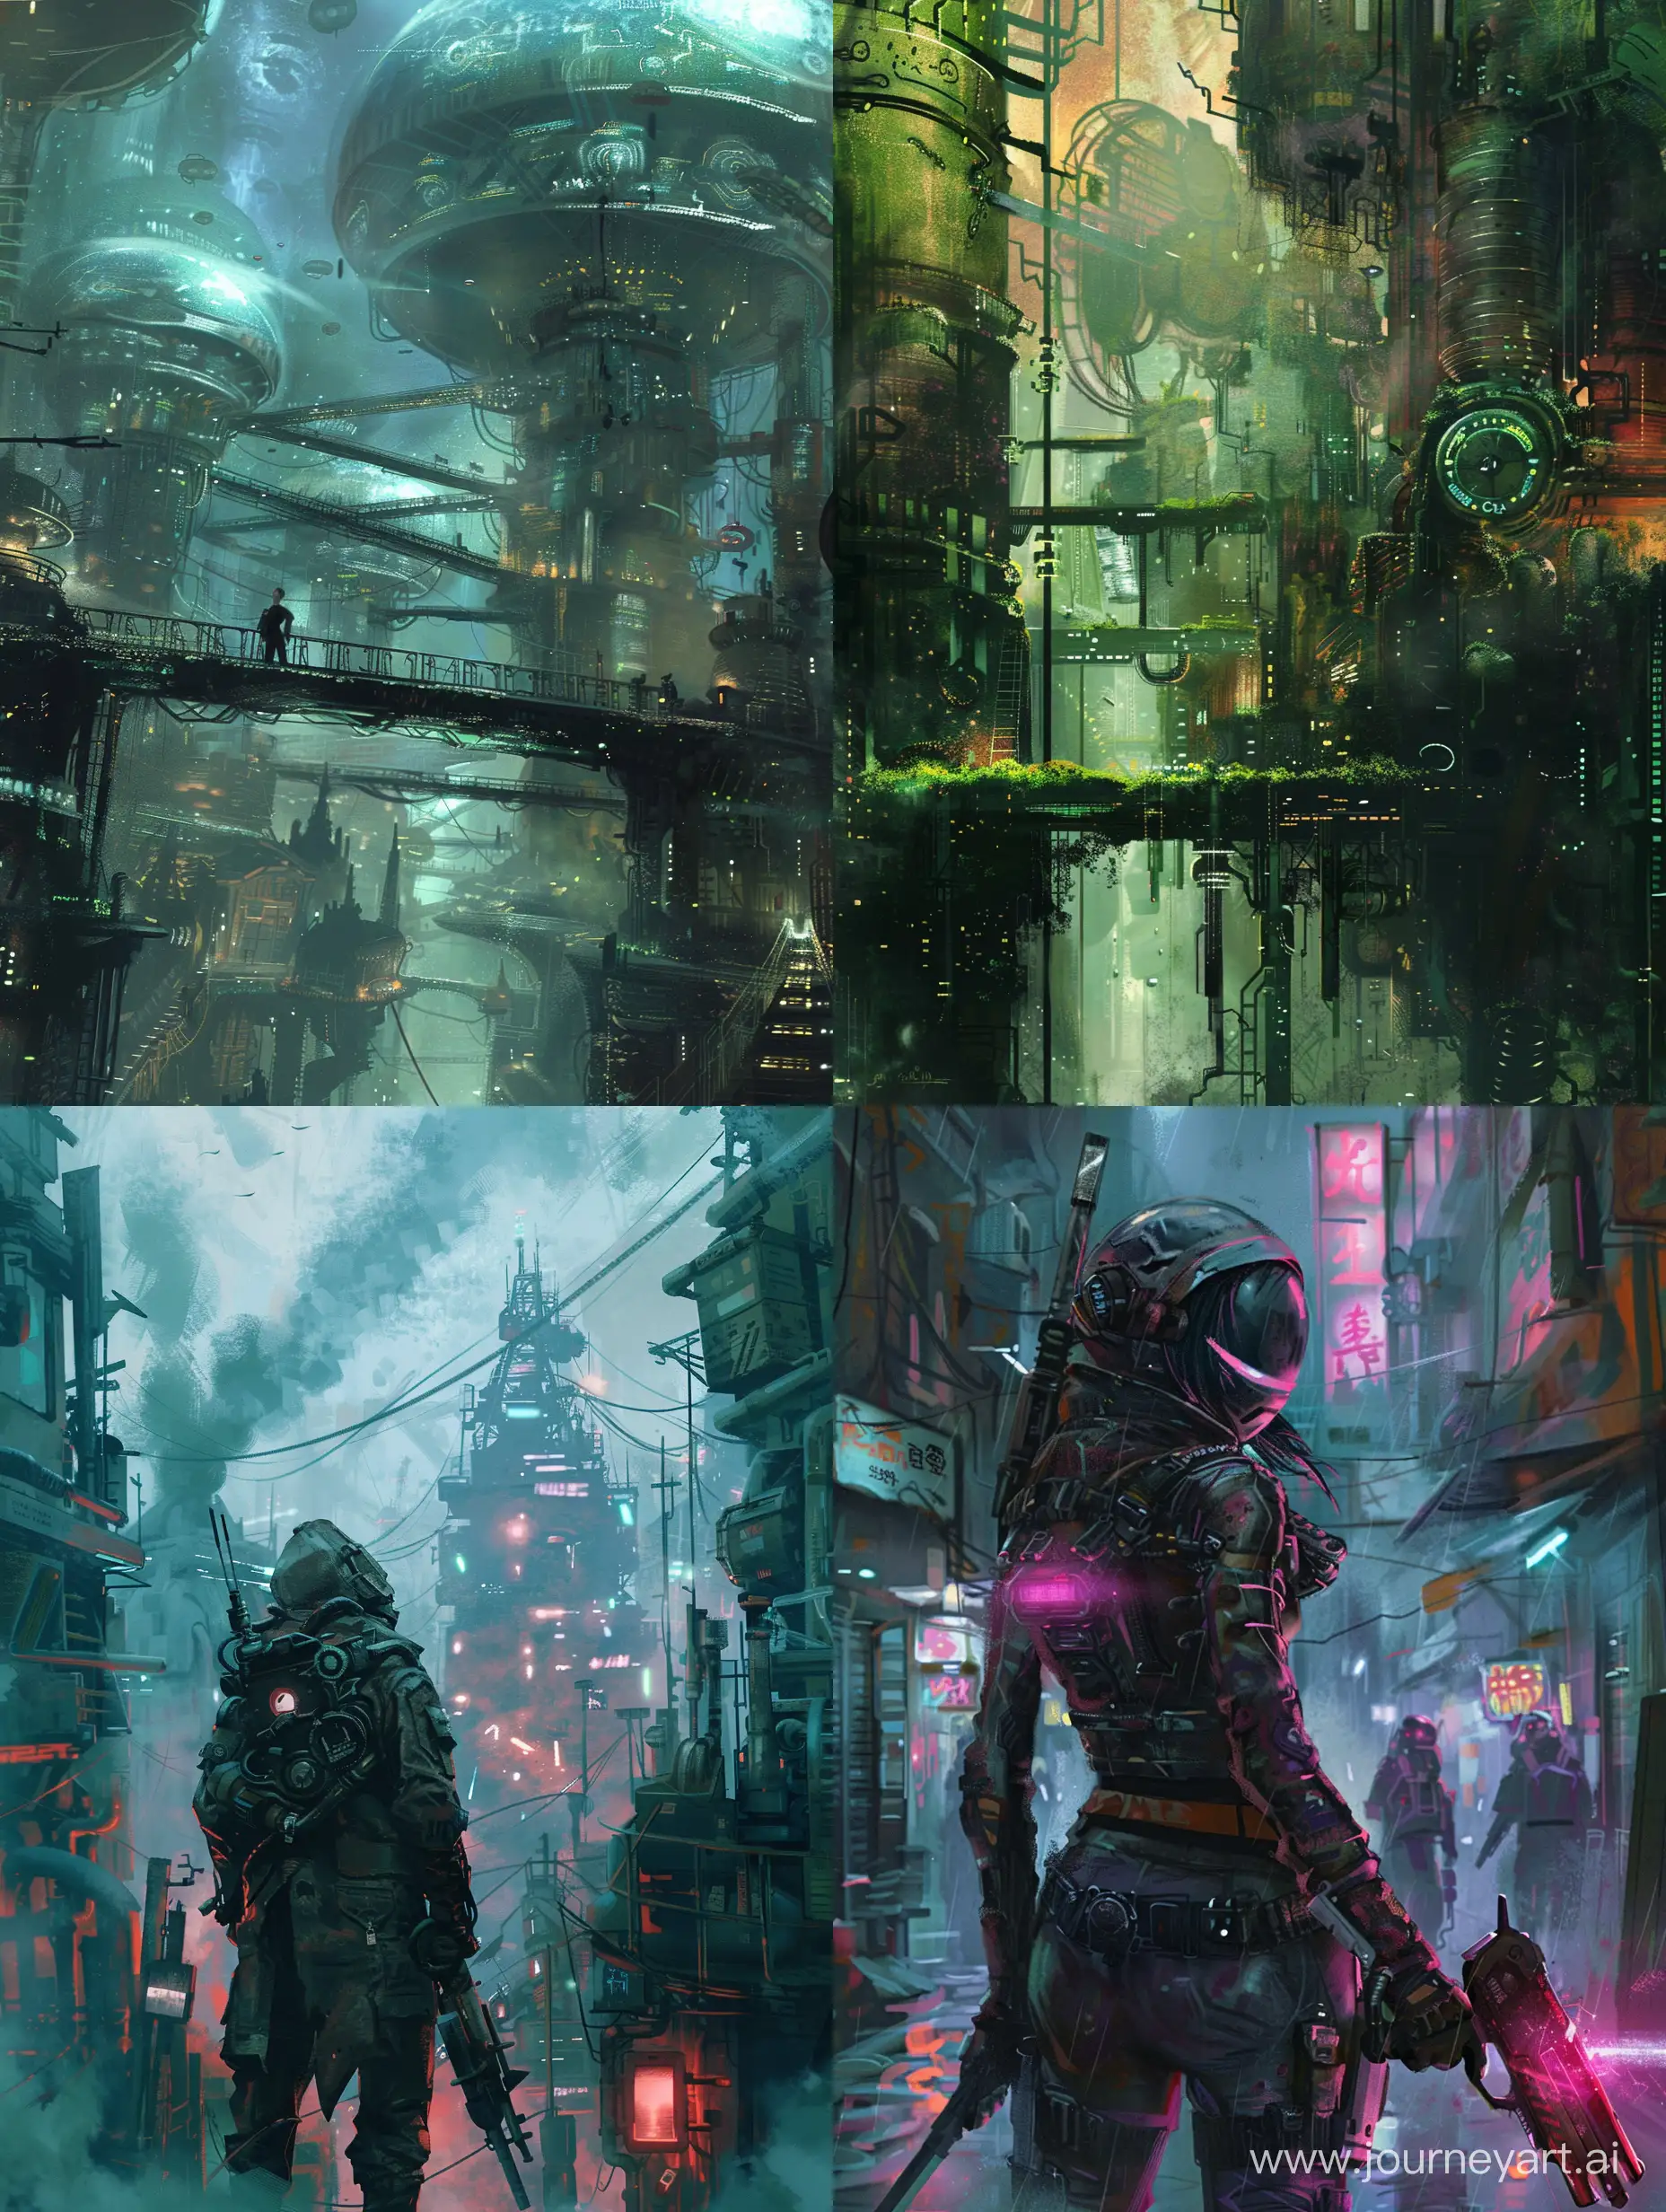 Link in Biopunk setting, art